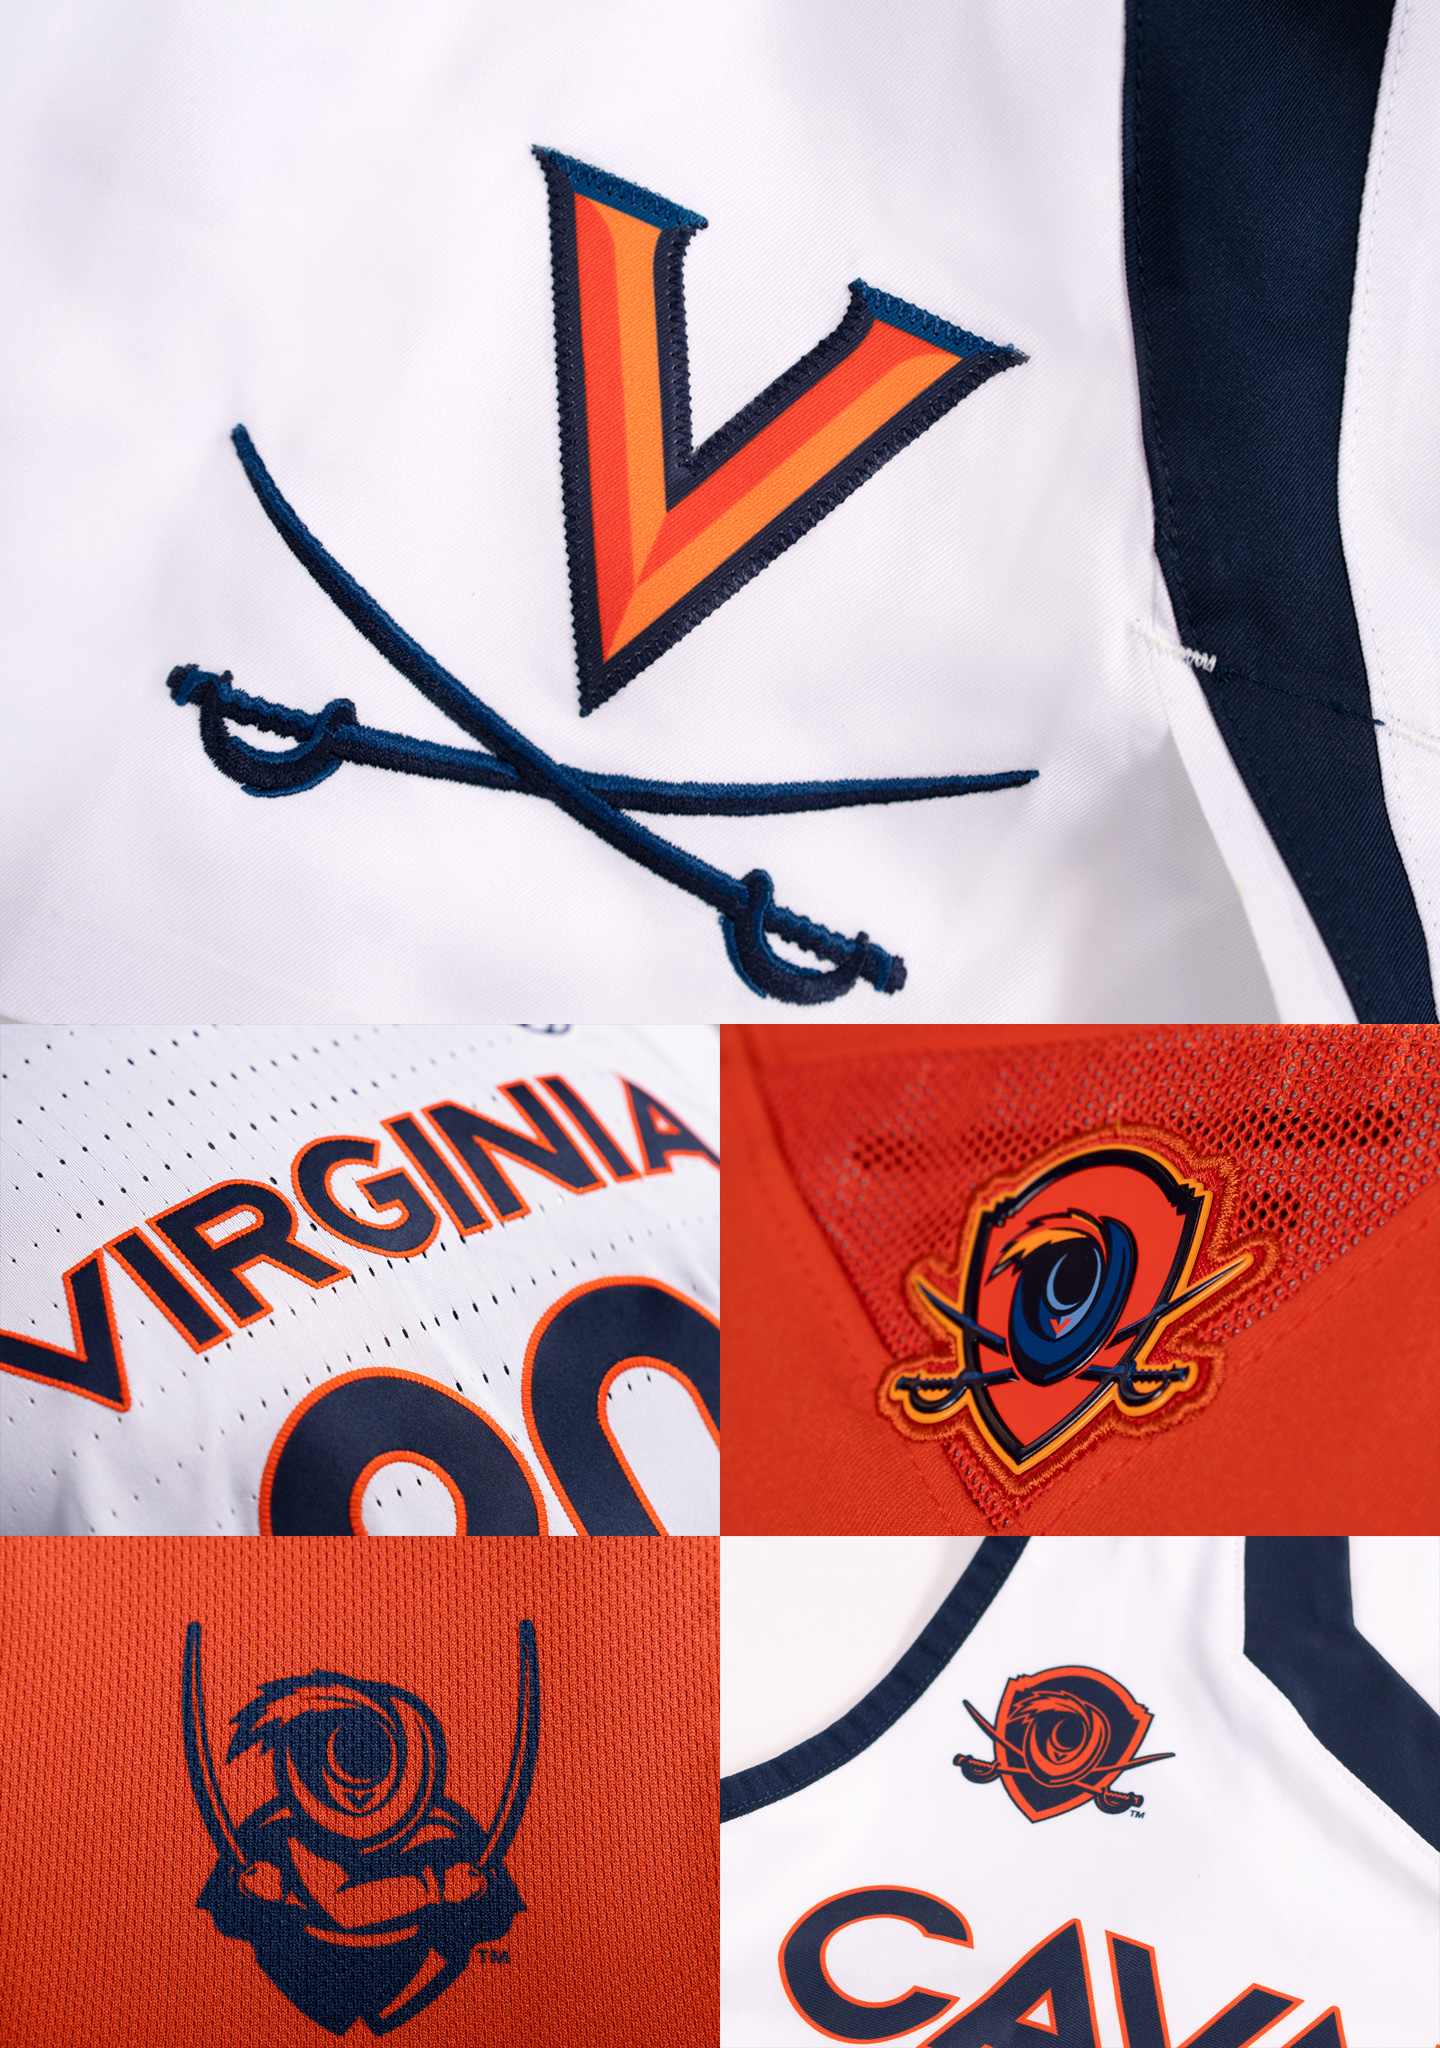 New Logos for Virginia Athletics by Nike GIG